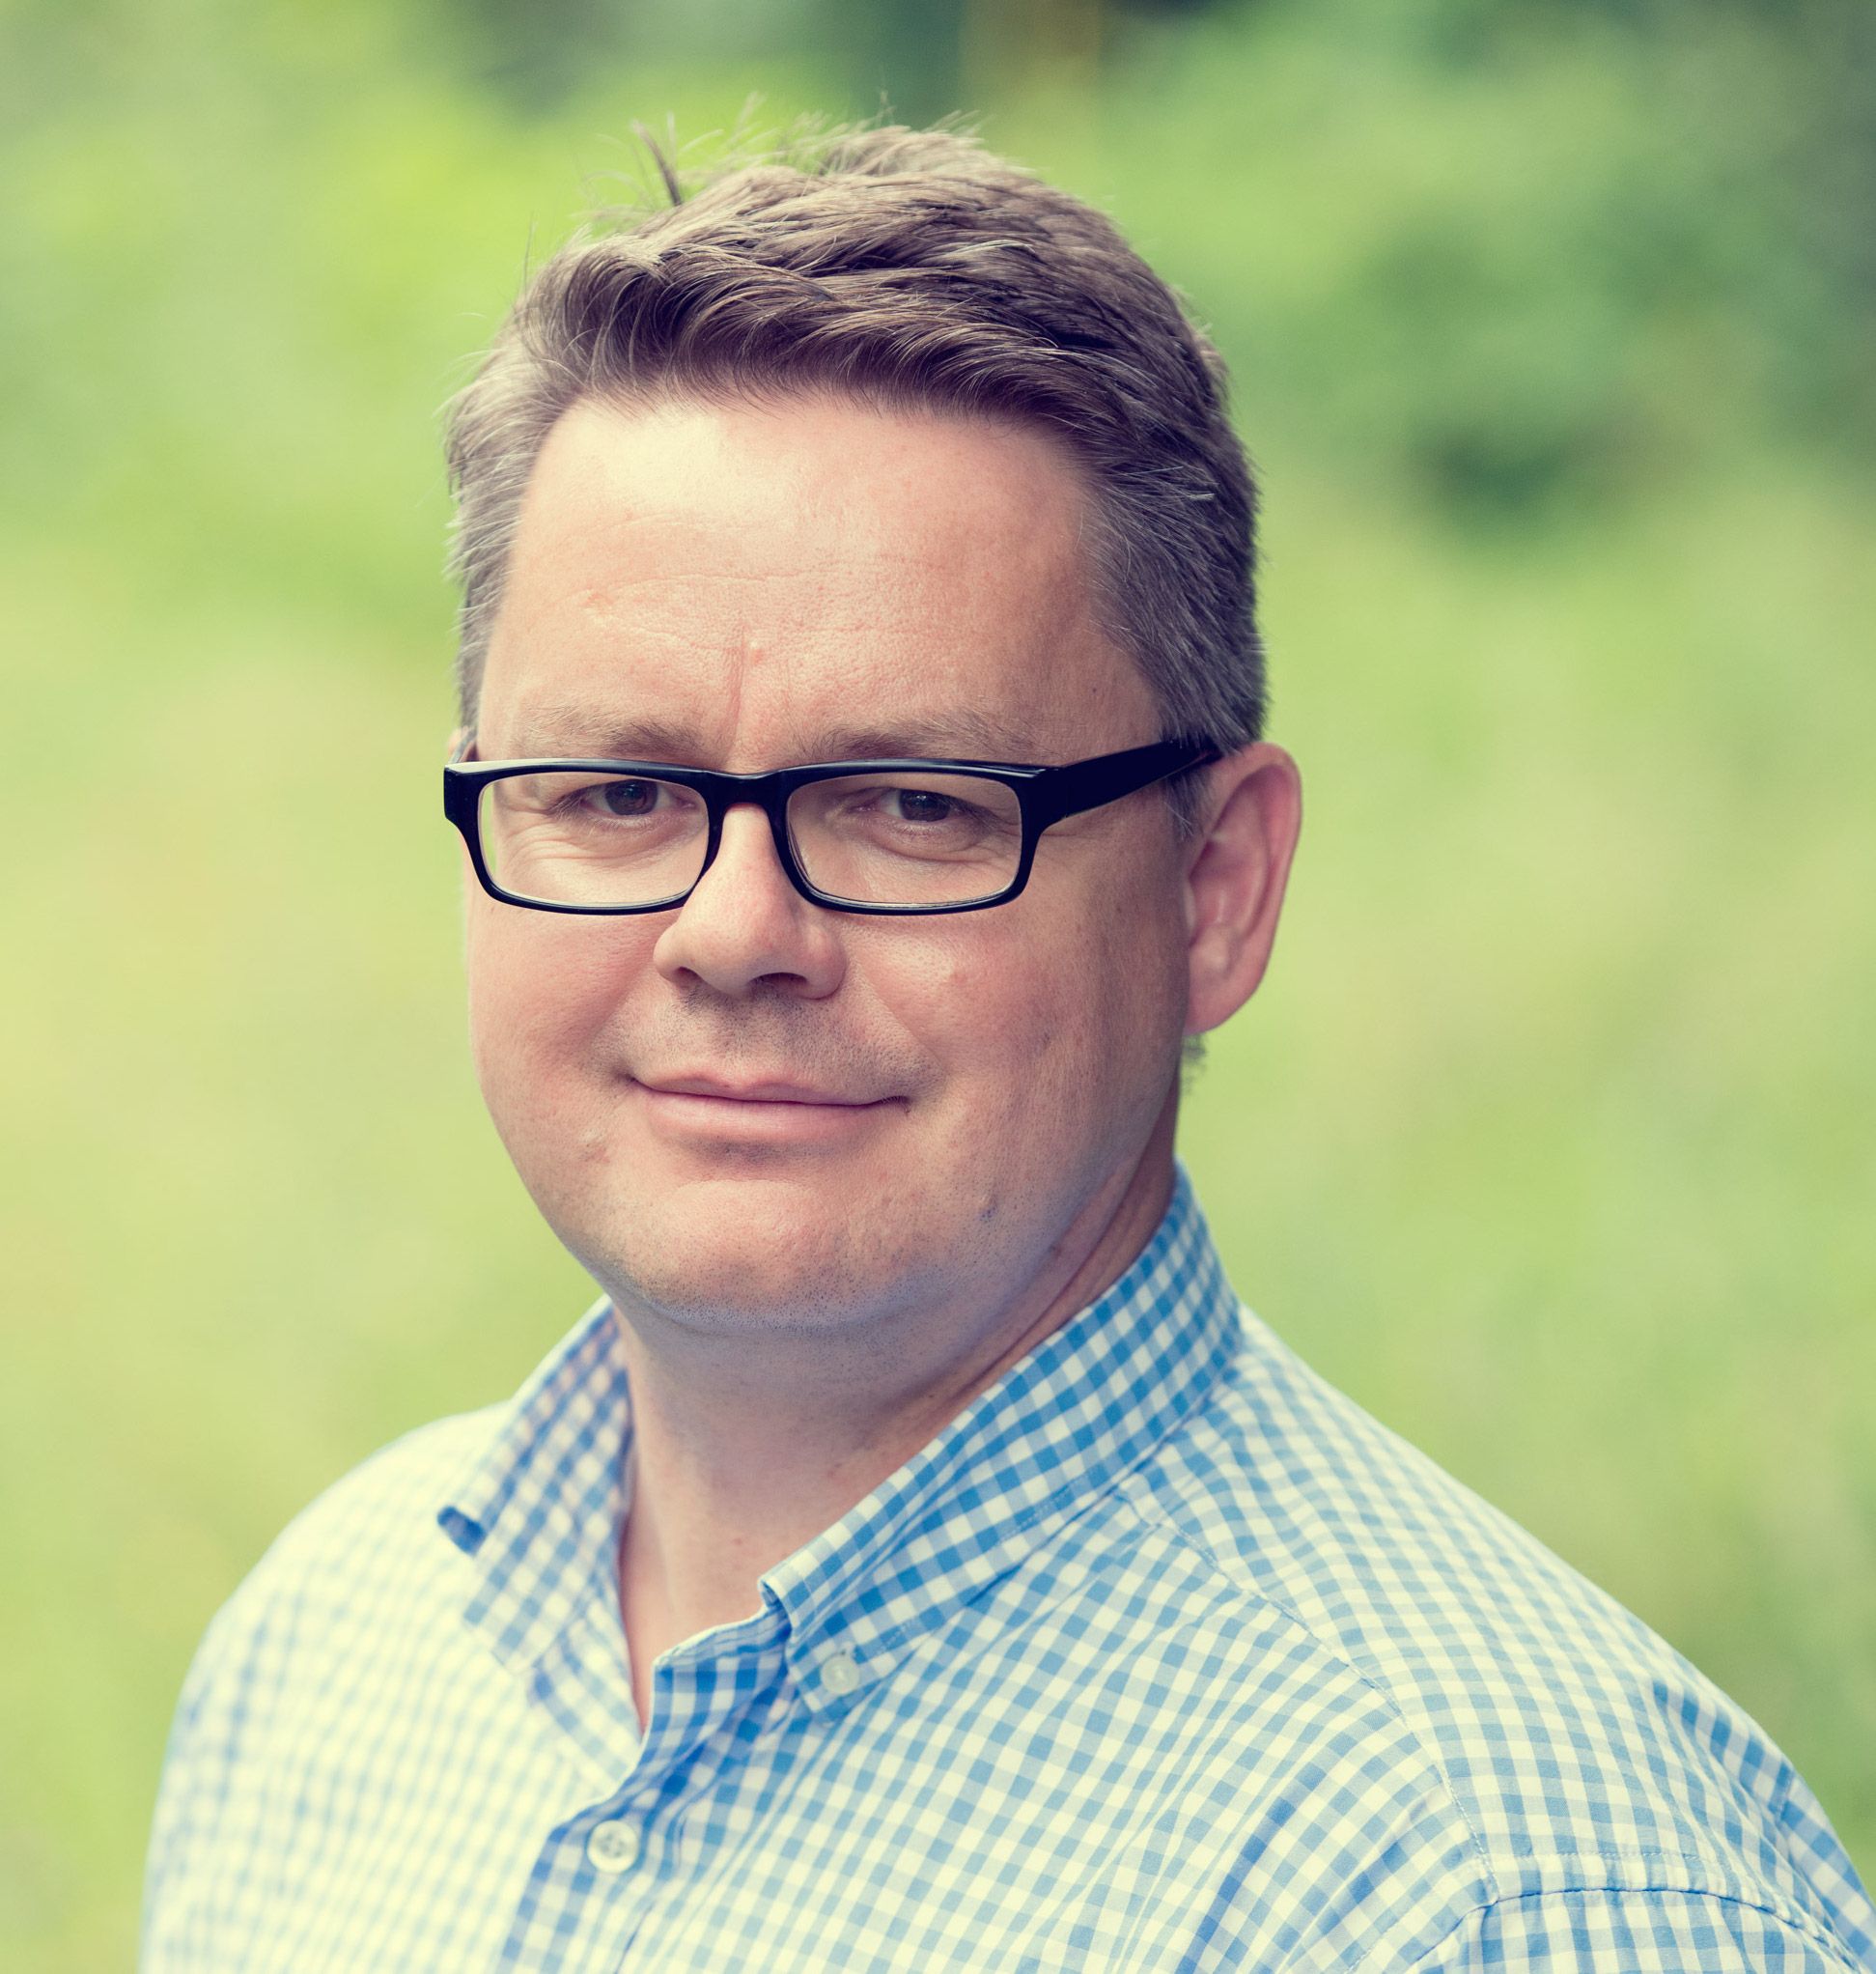 Interview with dotCMS Chief Sales Officer, Stefan Schinkel